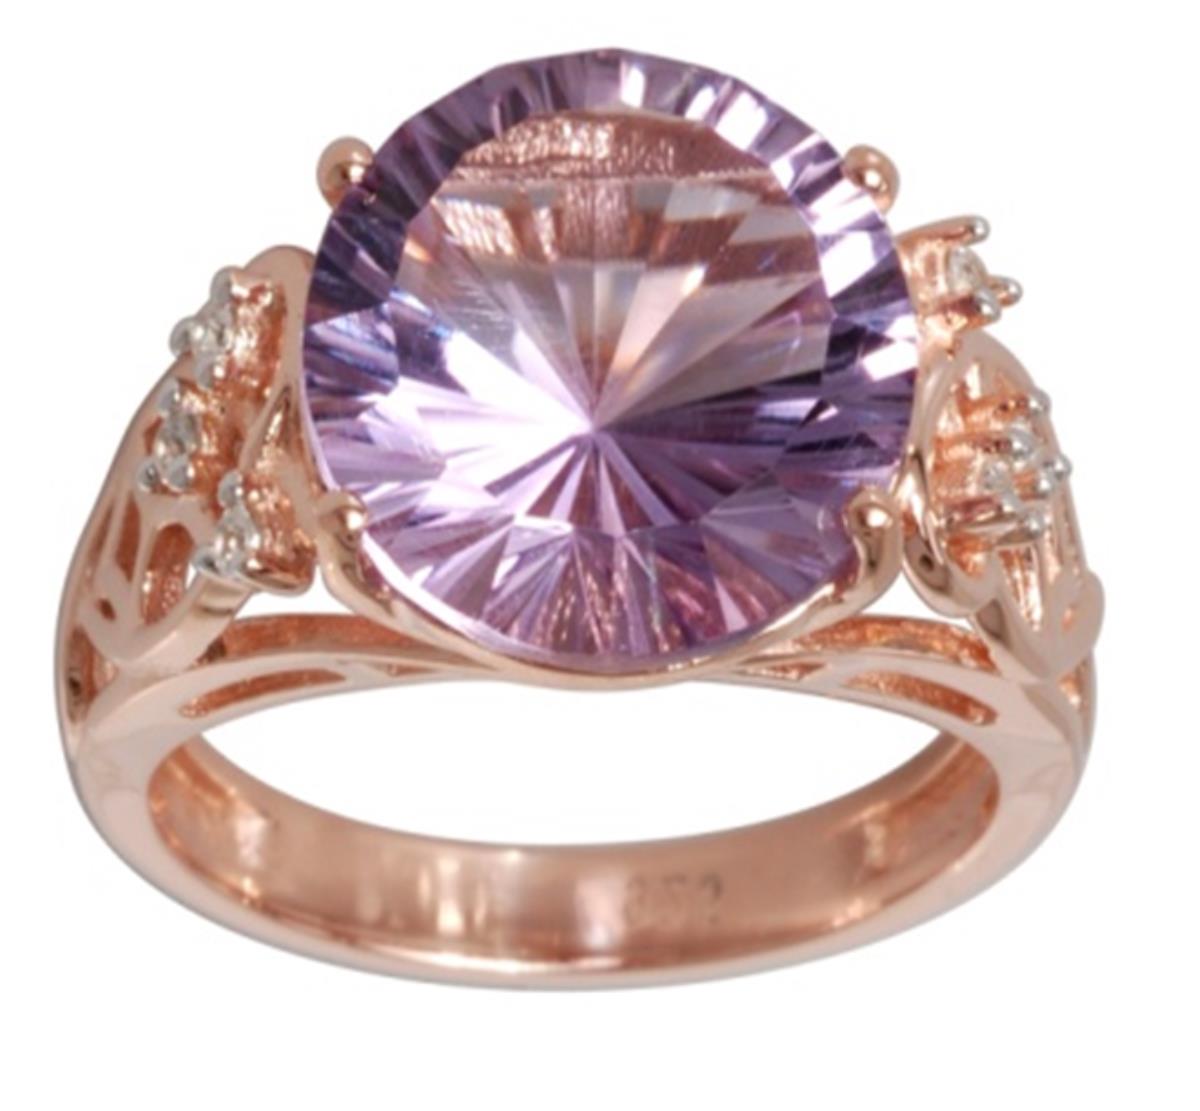 10K Rose Gold 12mm Round Cut Pink Amethyst & White Zircon Filigree Sides Fashion Ring